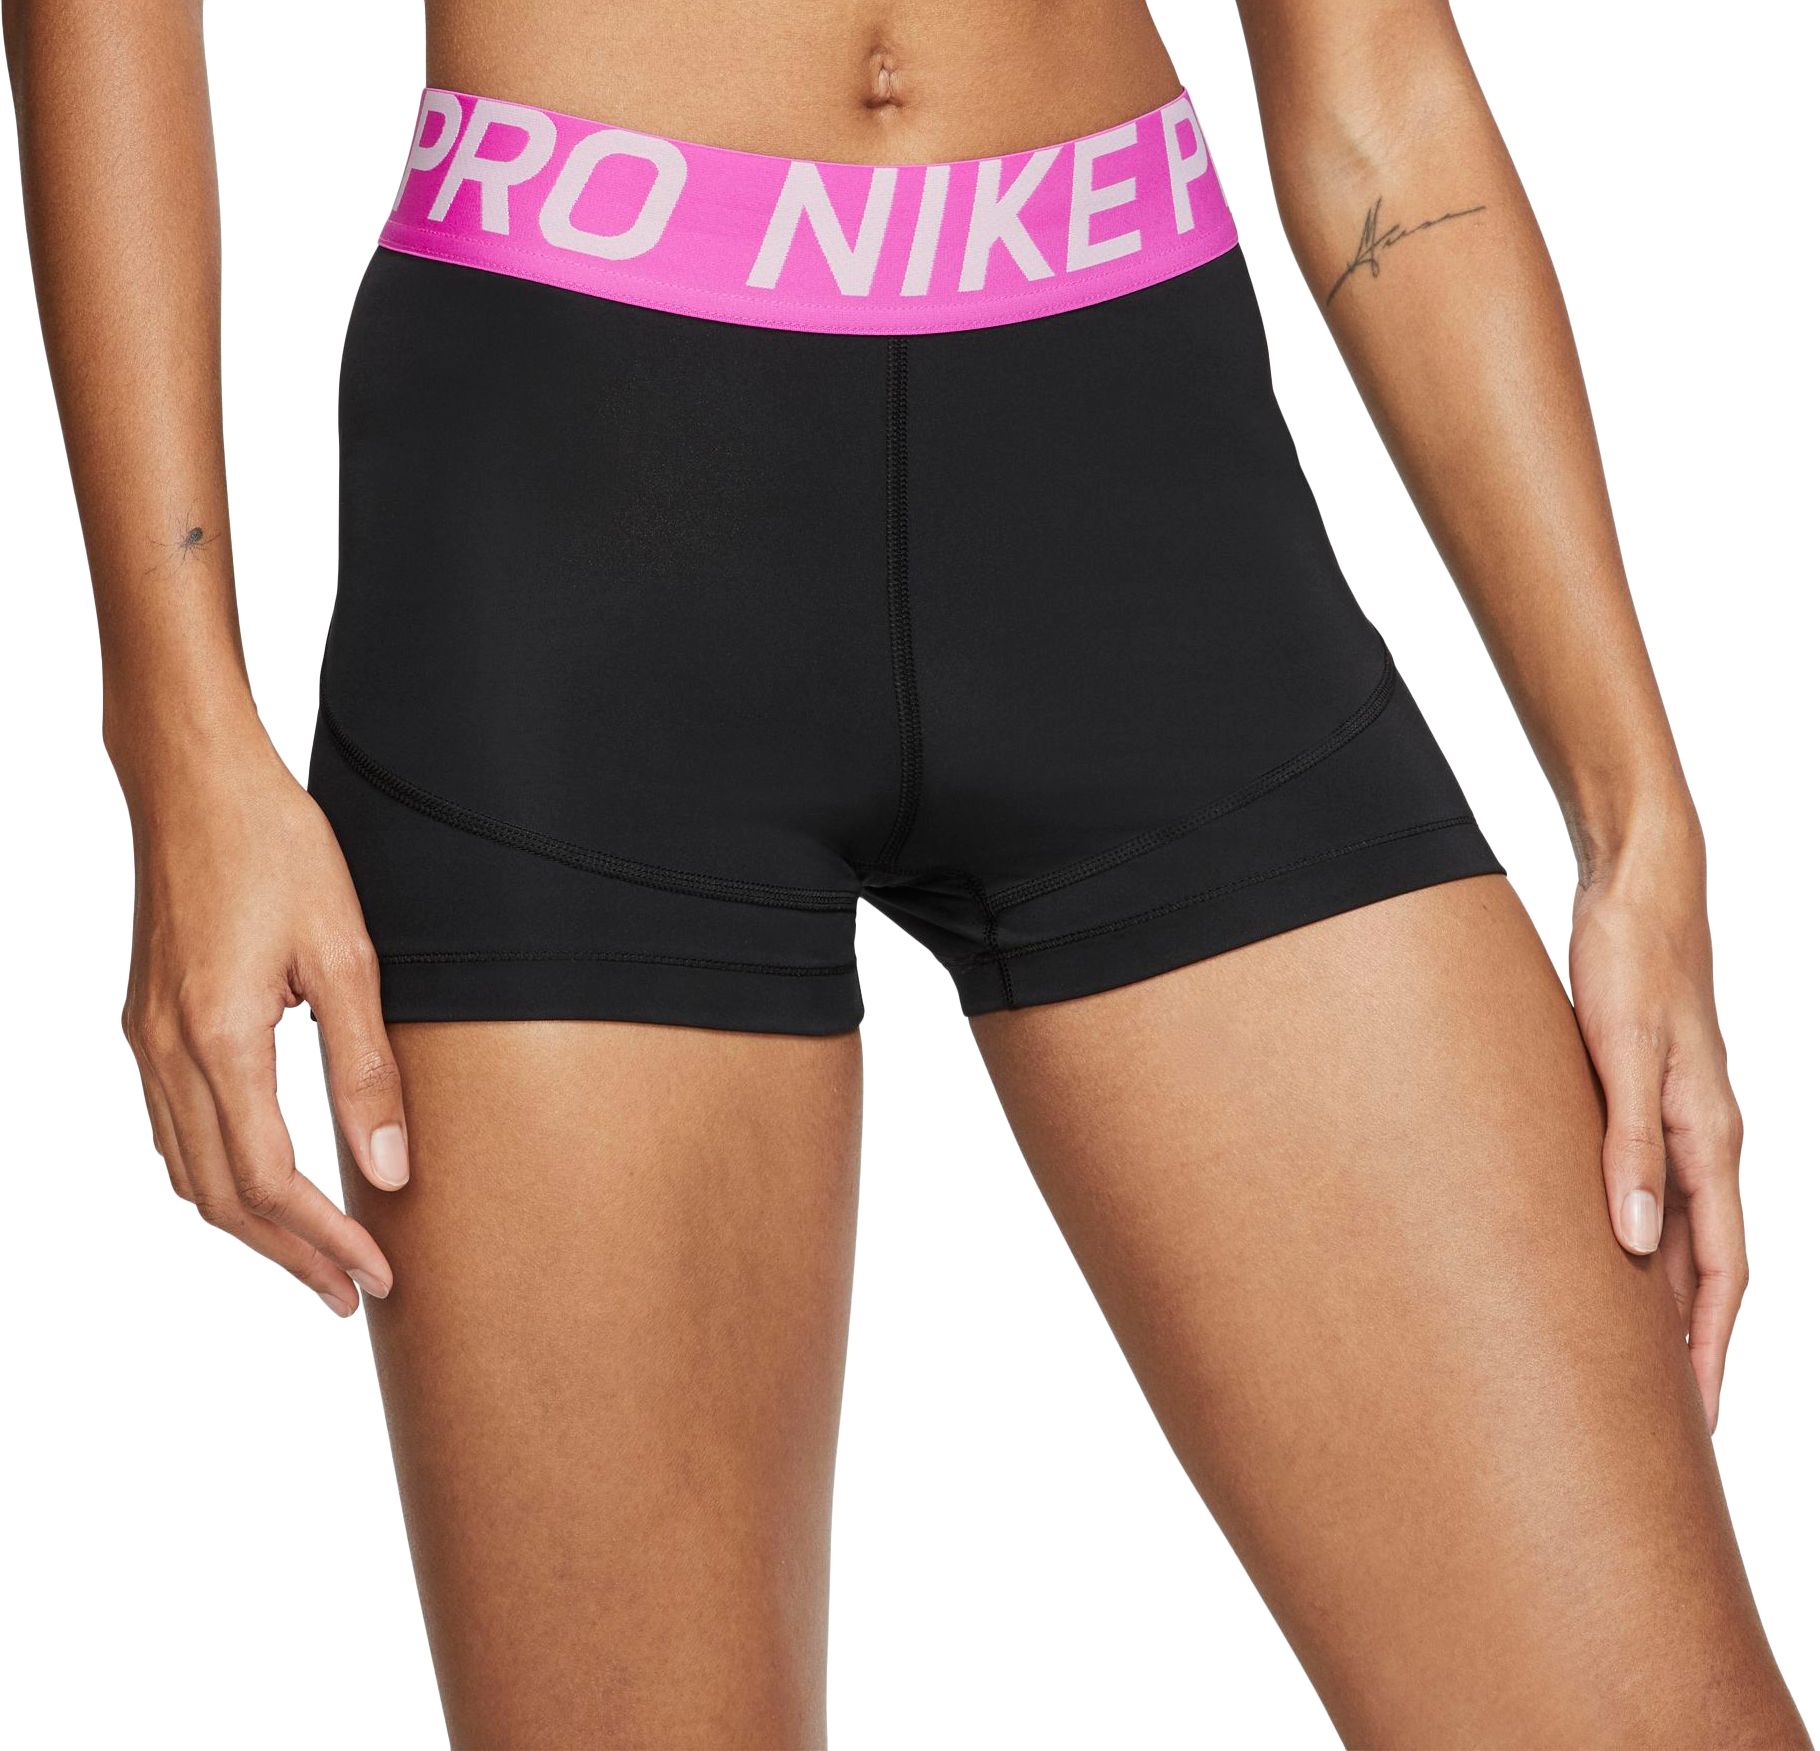 nike compression shorts womens